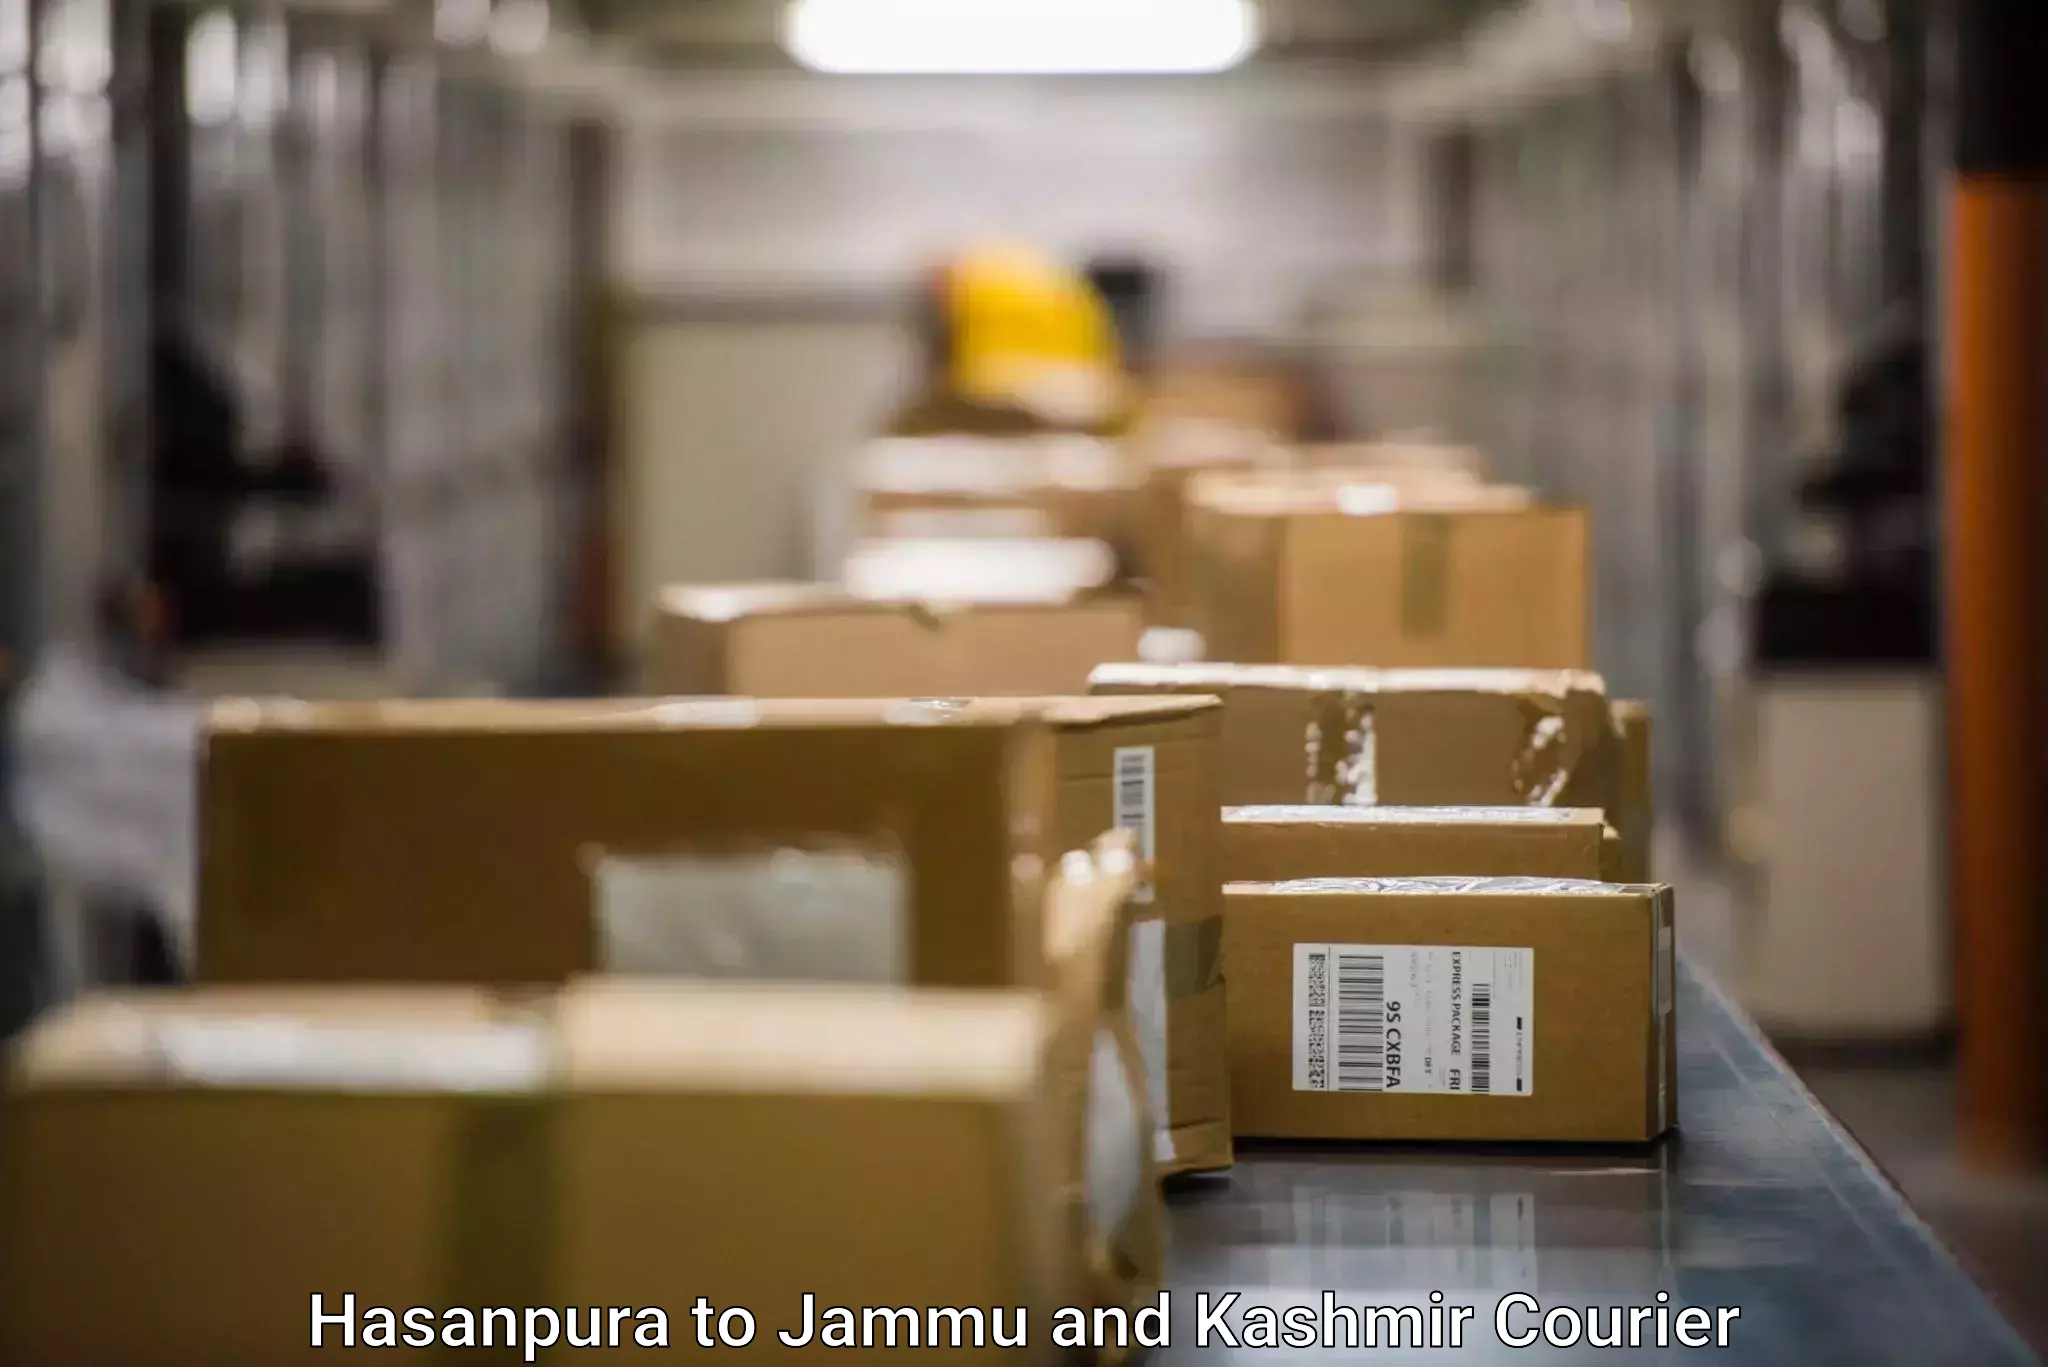 Smart shipping technology Hasanpura to Jammu and Kashmir